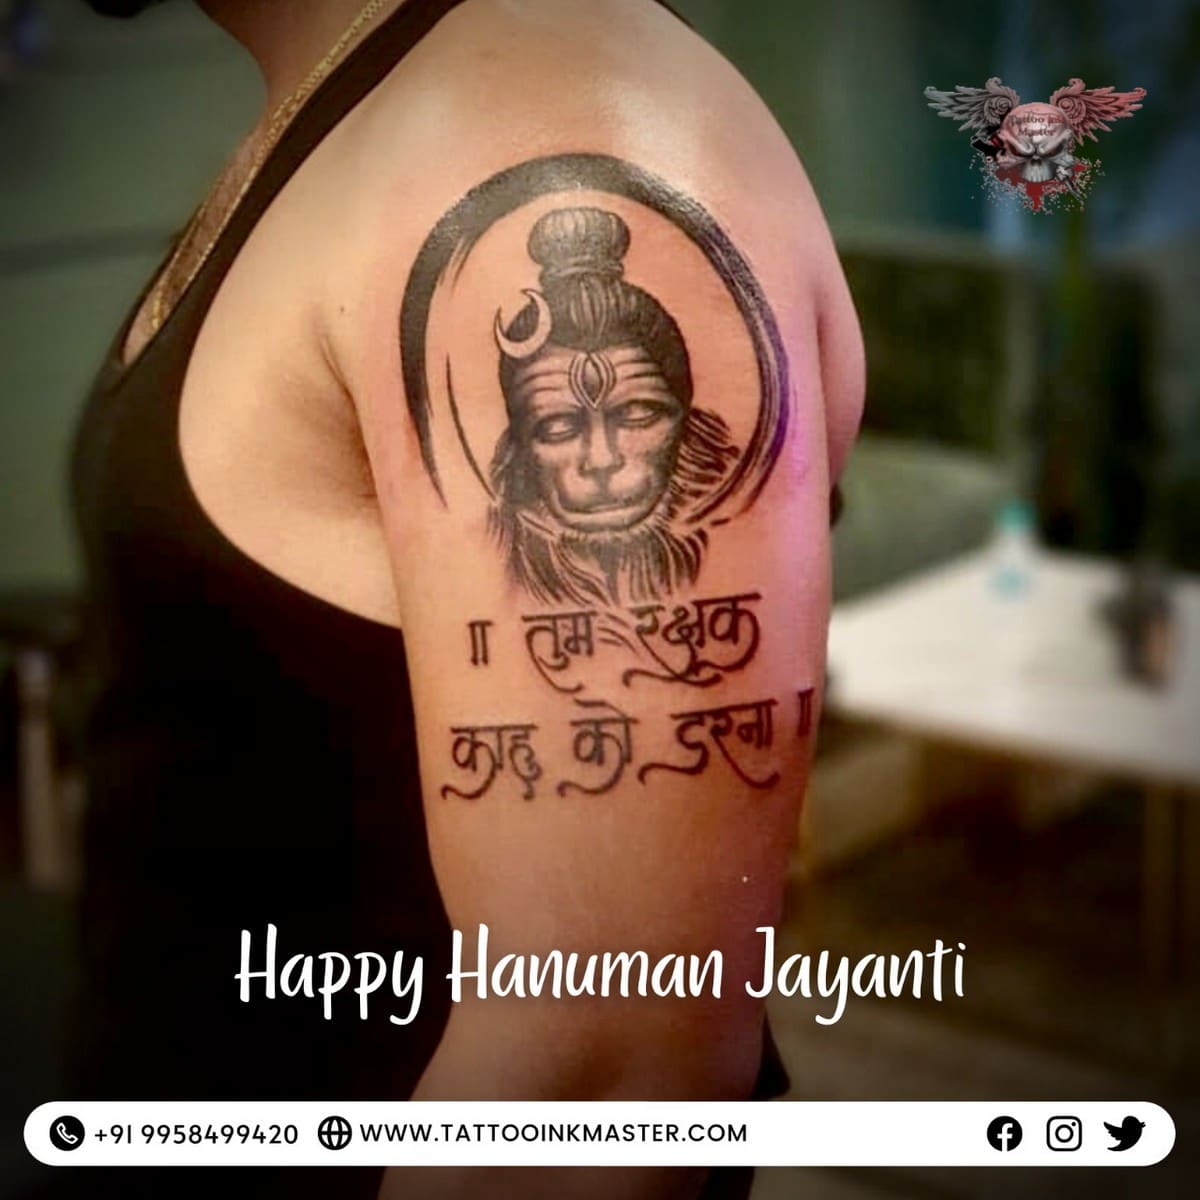 Senior Adult Man Rear View Hanuman Tattoo Spiritual Arts Stock Image -  Image of faith, person: 89806437